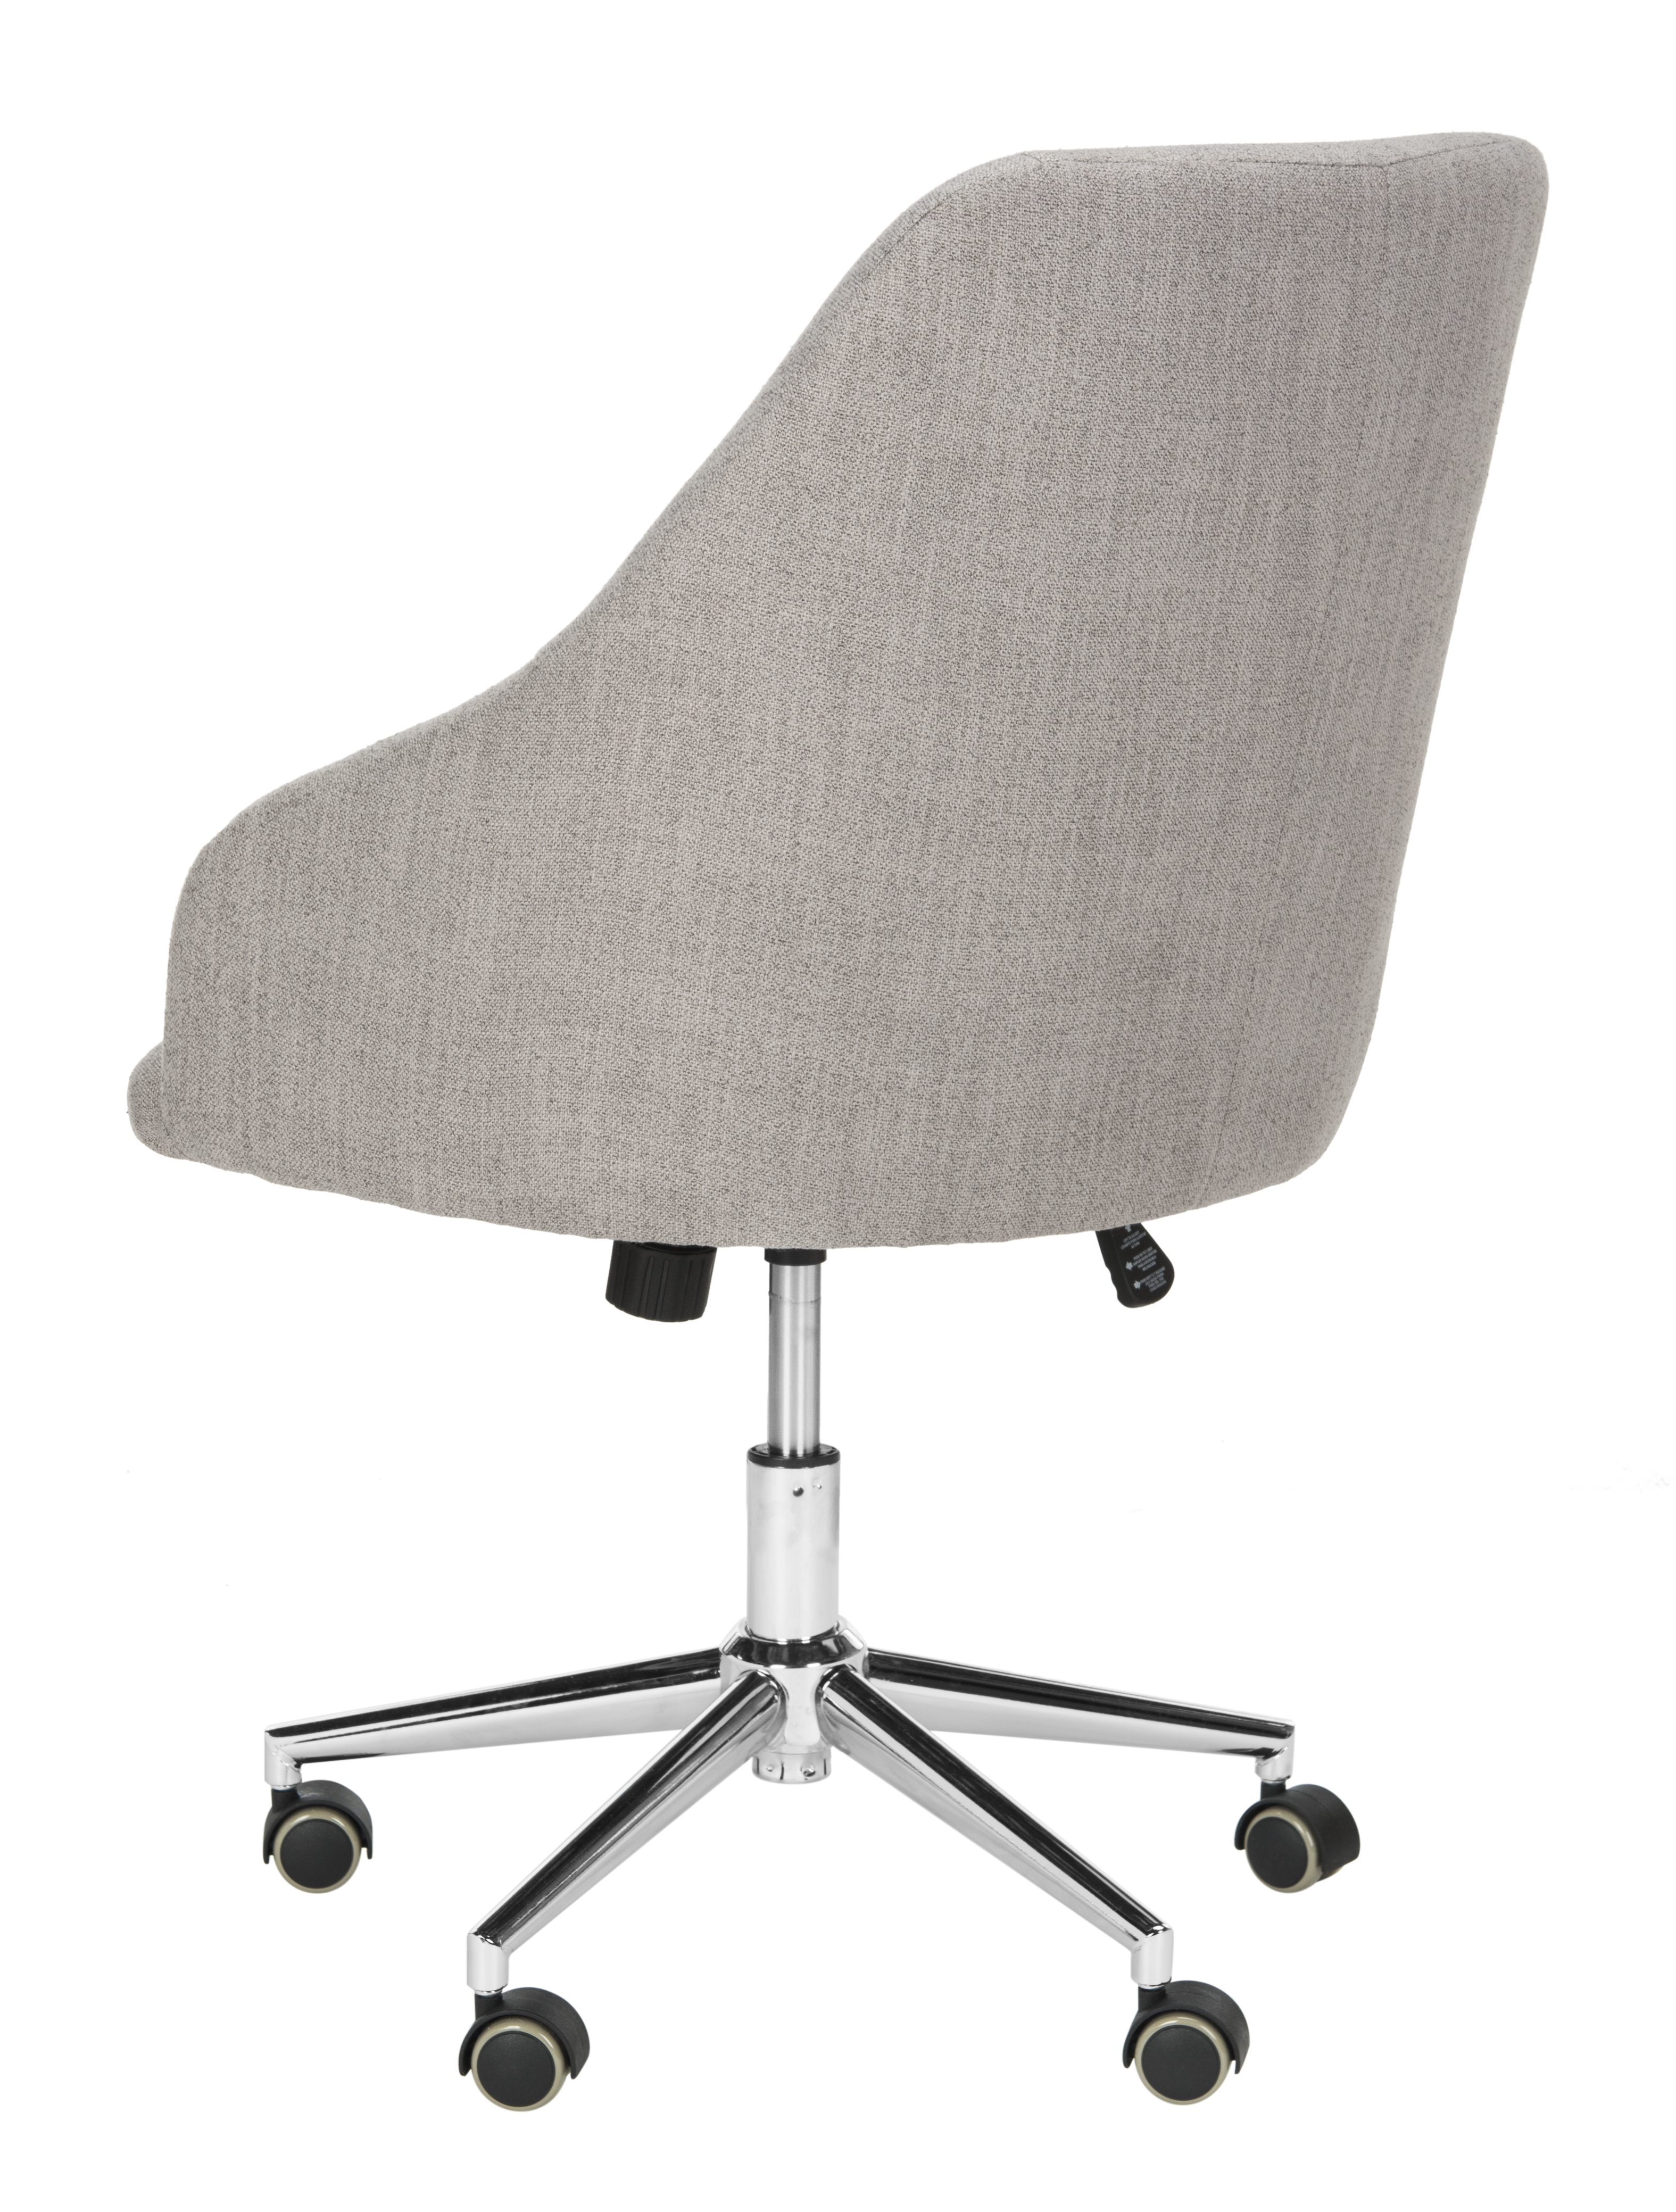 Adrienne Linen Chrome Leg Swivel Office Chair - Grey/Chrome - Safavieh - Image 3